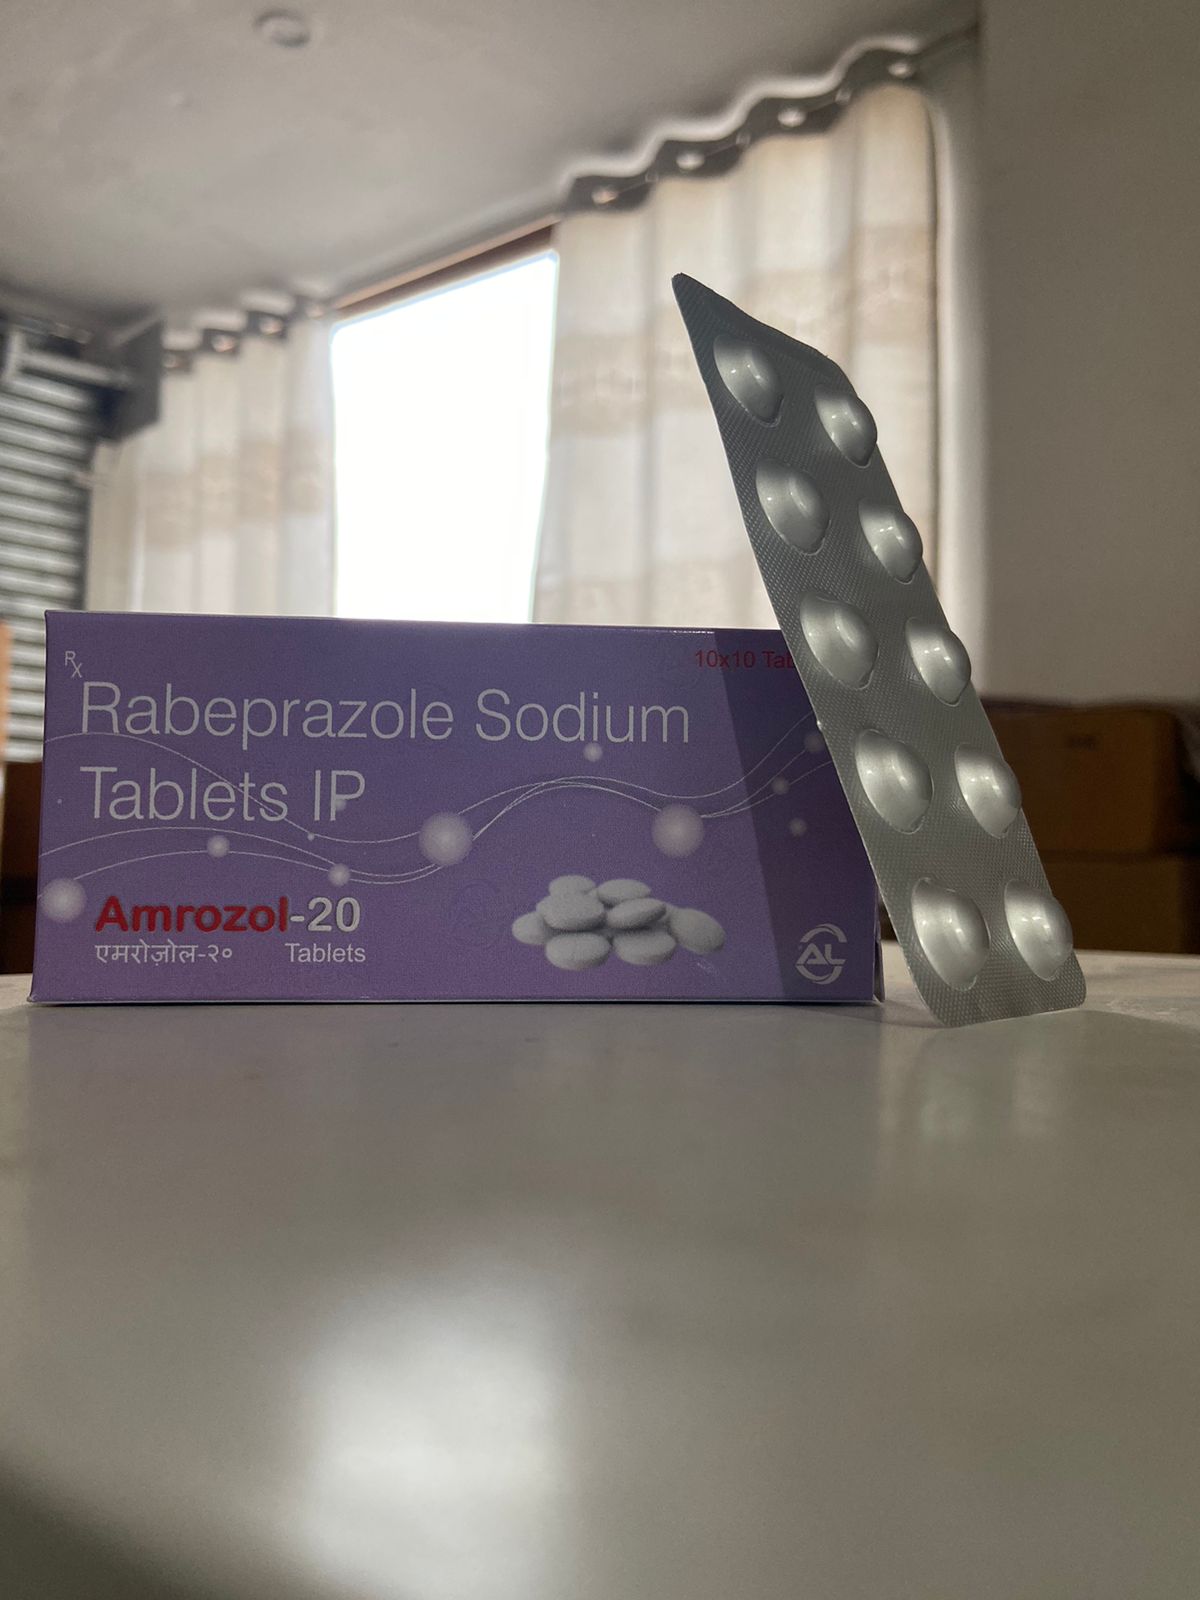 Product Name: RABEPRAZOLE SODIUM TABLET, Compositions of RABEPRAZOLE SODIUM TABLET are RABEPRAZOLE  20 TABLETS  - Amross Lifesciences